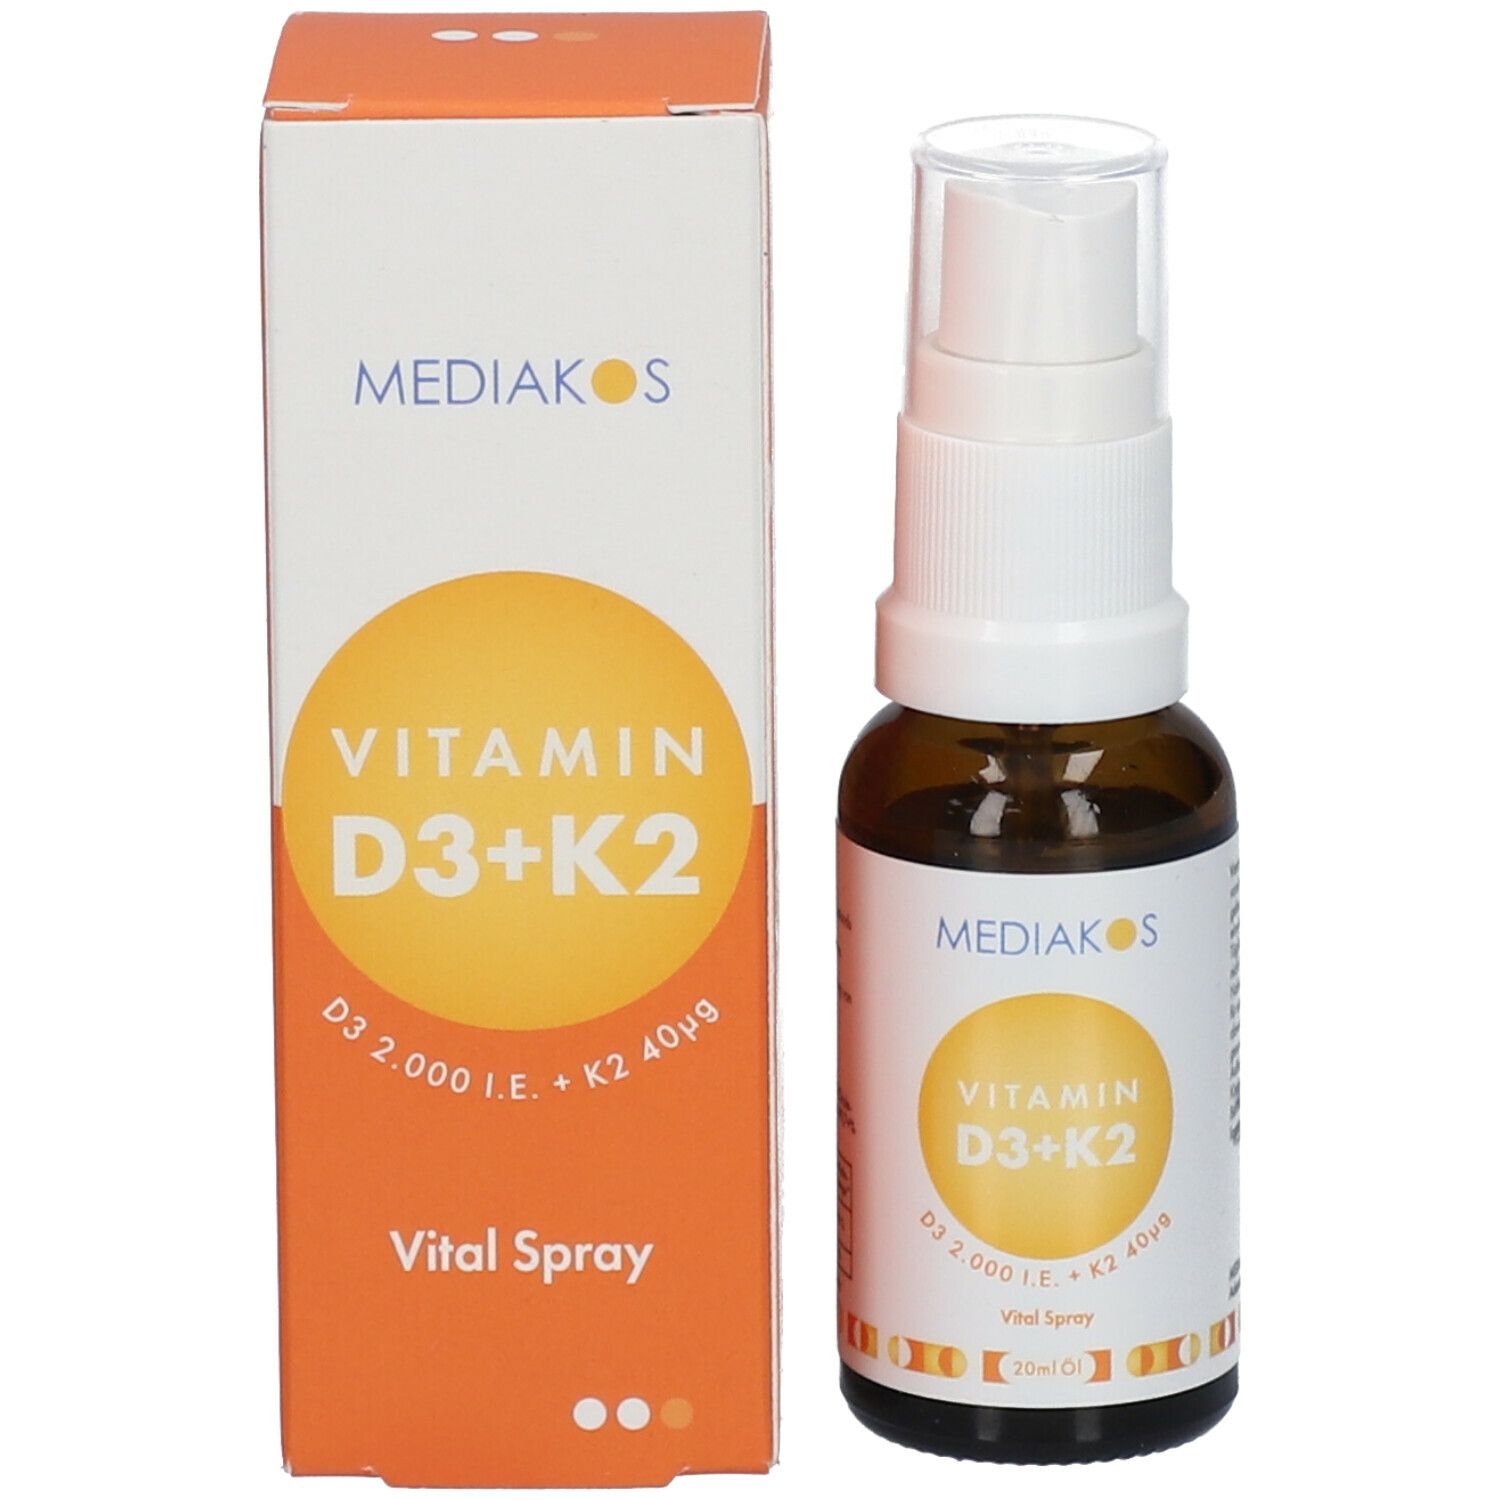 MEDIAKOS Vitamin D3 + K2 2.000 I.E. 40 µg Vital Spray